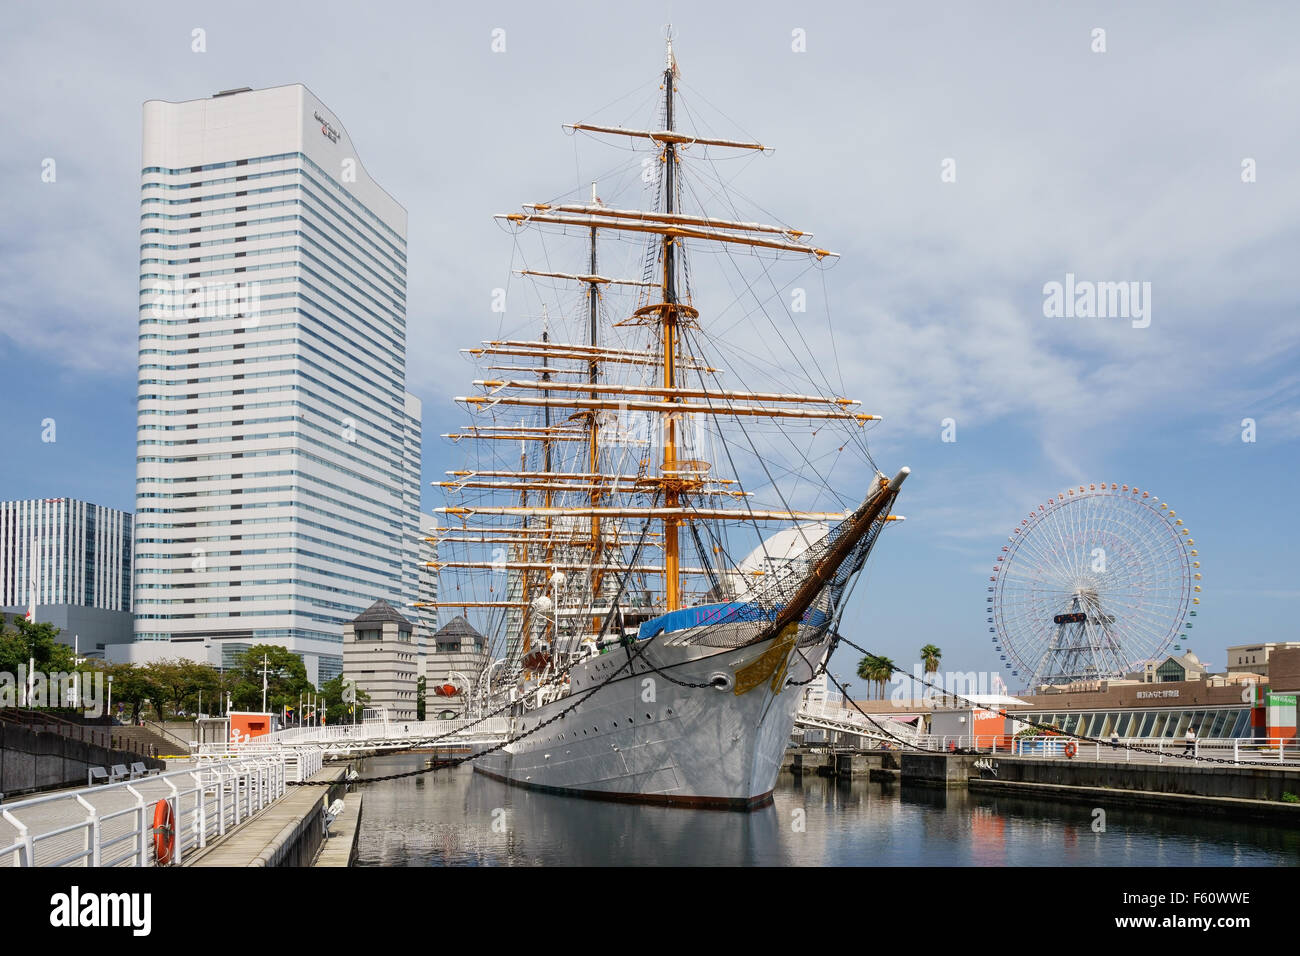 The Nippon Maru sailing ship at the harbour at Minato Mirai, Yokohama, Japan. Stock Photo